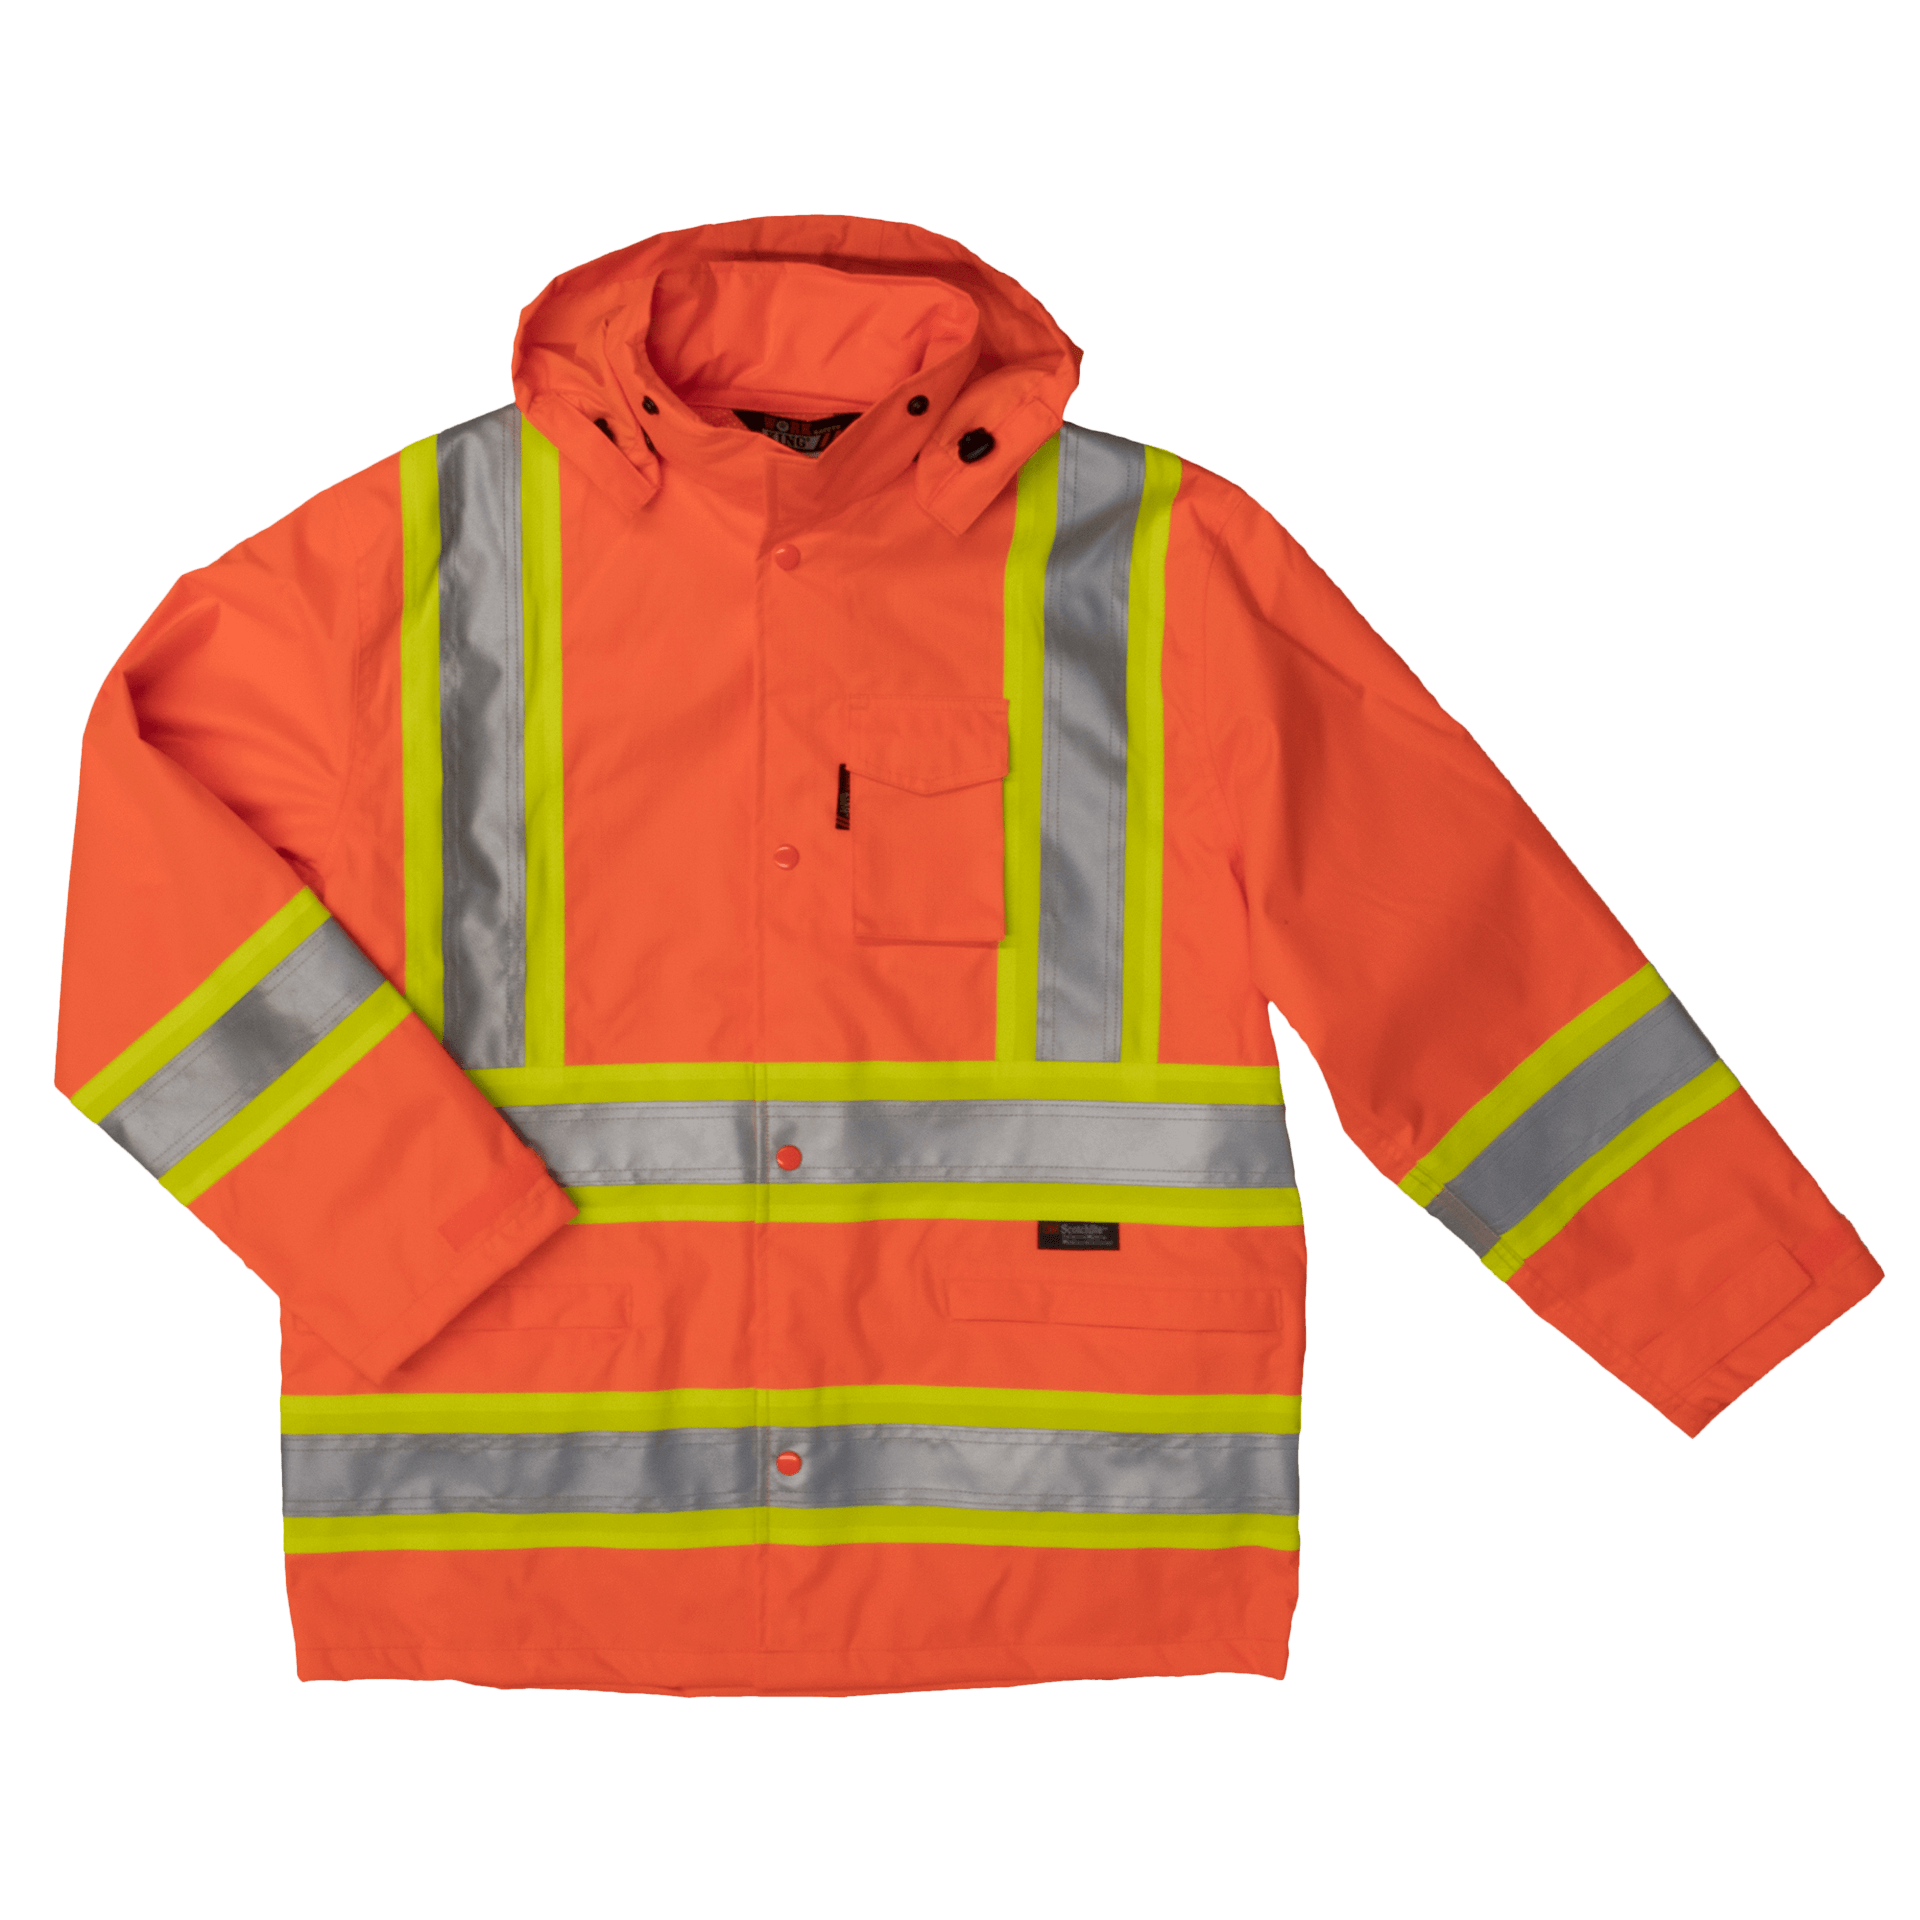 Tough Duck Safety Rain Jacket - S372 - Fluorescent Orange